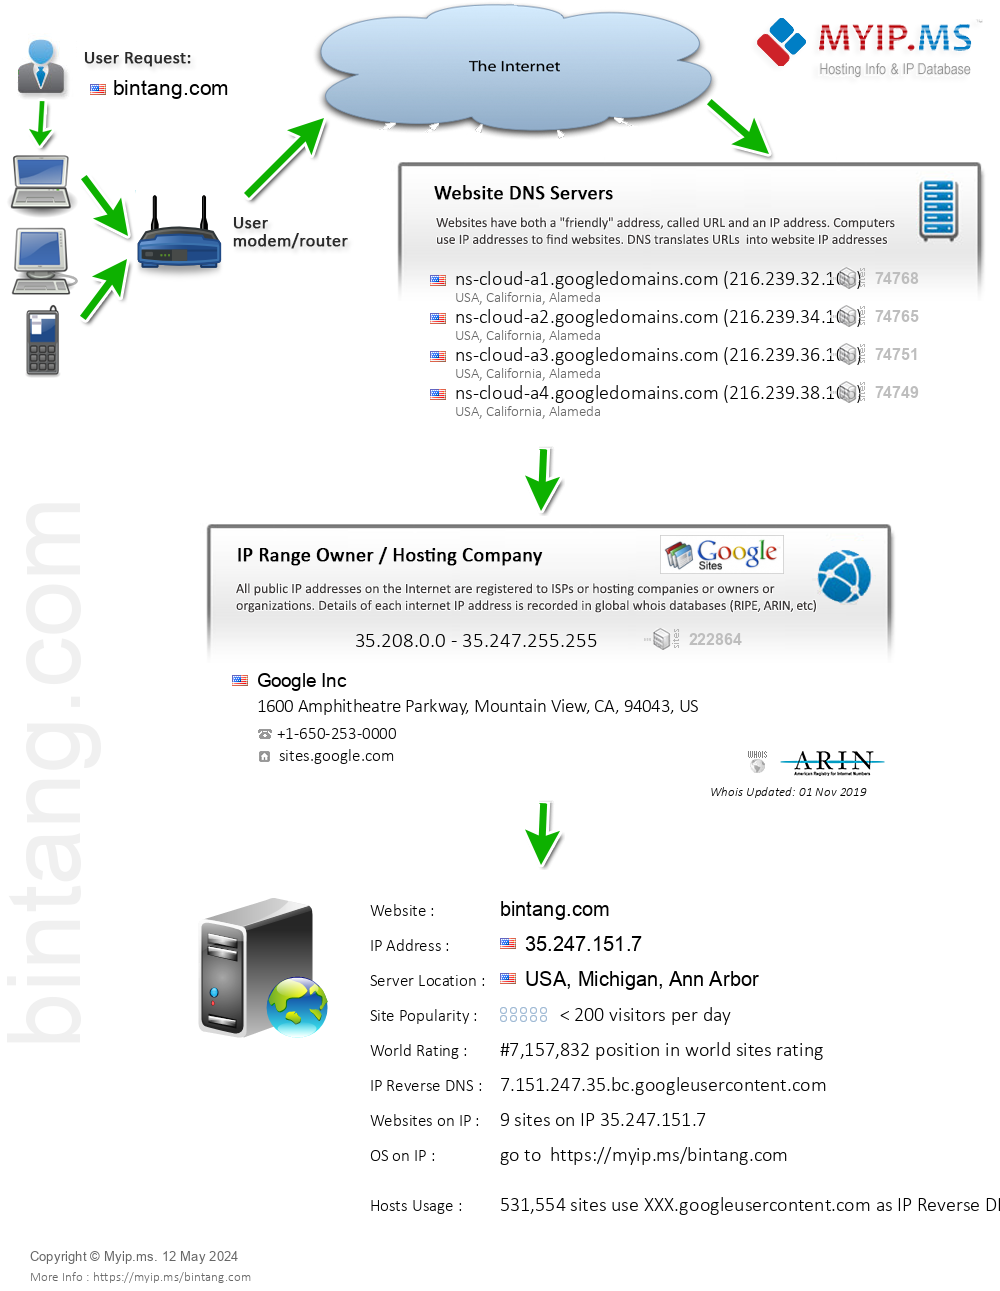 Bintang.com - Website Hosting Visual IP Diagram